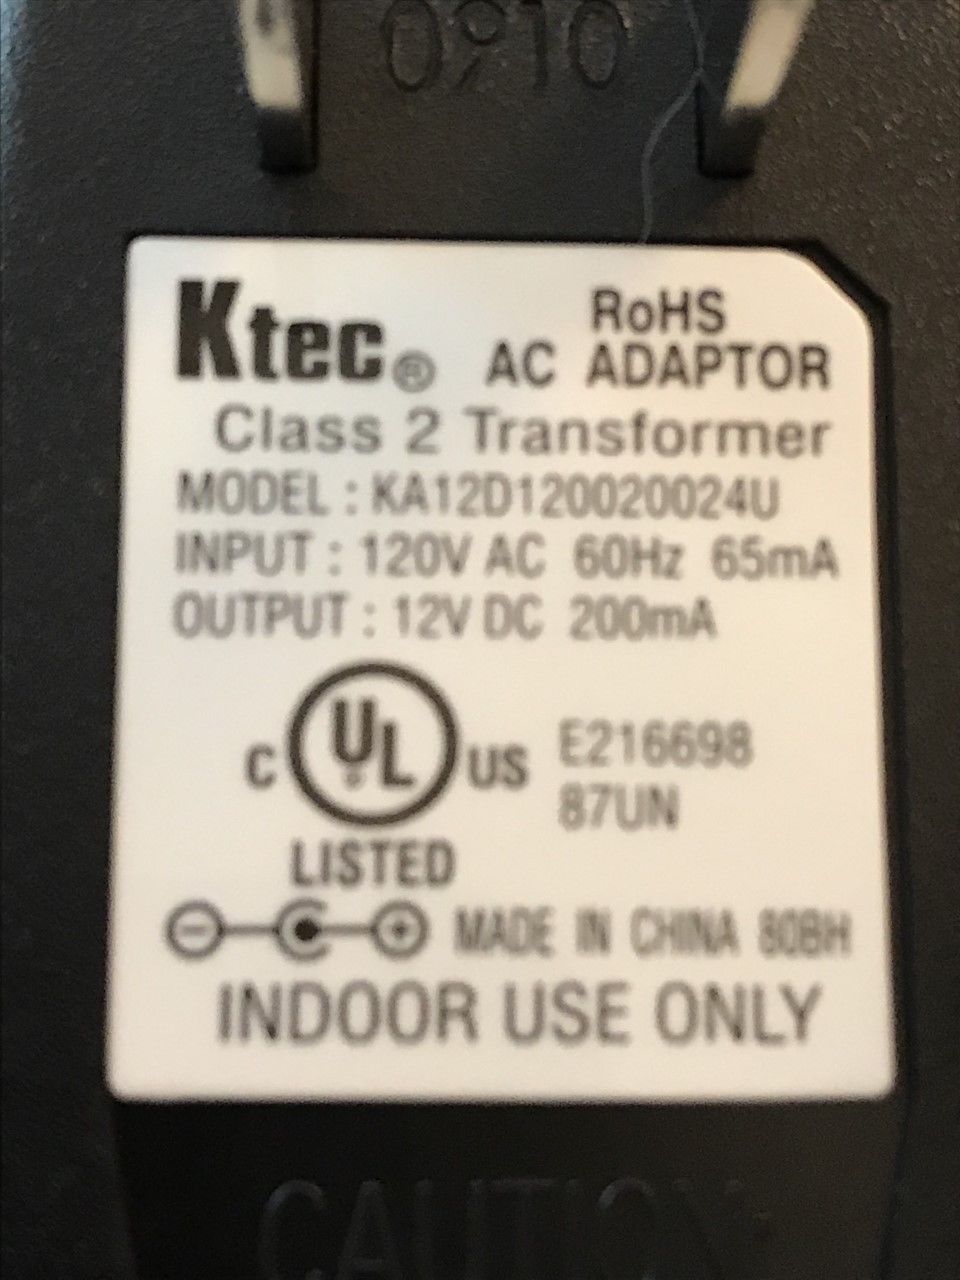 New 12V 200mA Ktec KA12D120020024U Class 2 Transformer Power Supply Ac Adapter